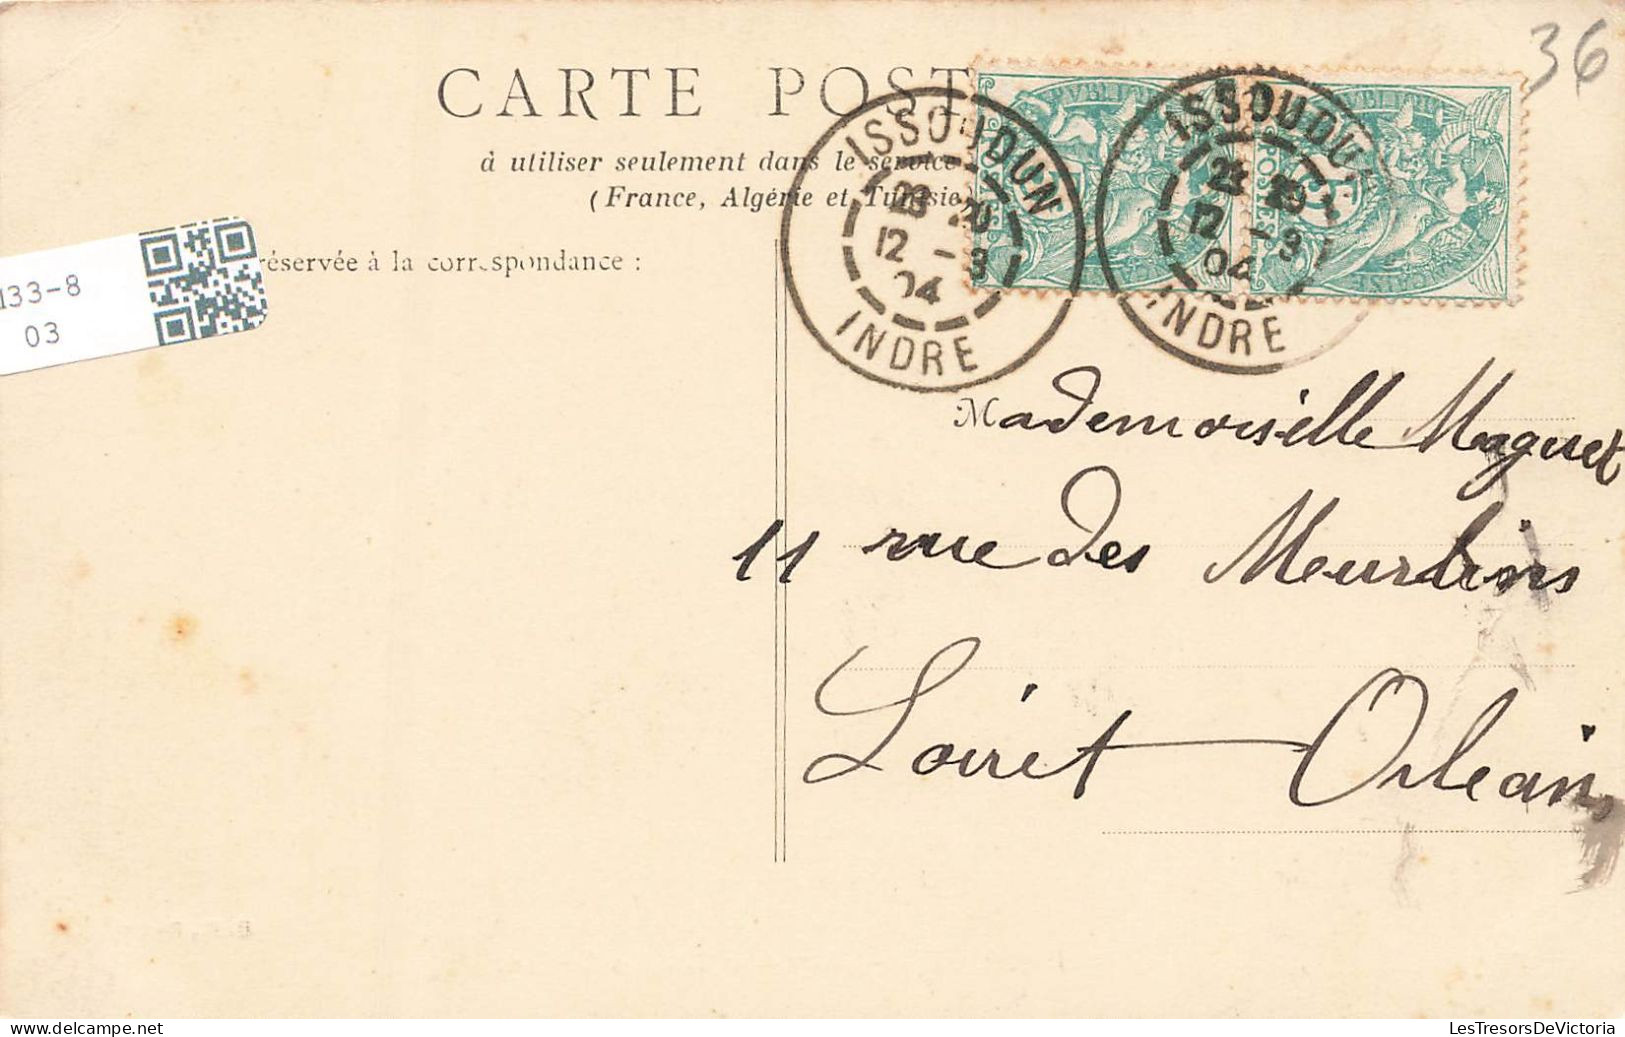 FRANCE - Issoudun - Carrefour Nicolas Leblanc - Charrette - Carte Postale Ancienne - Issoudun